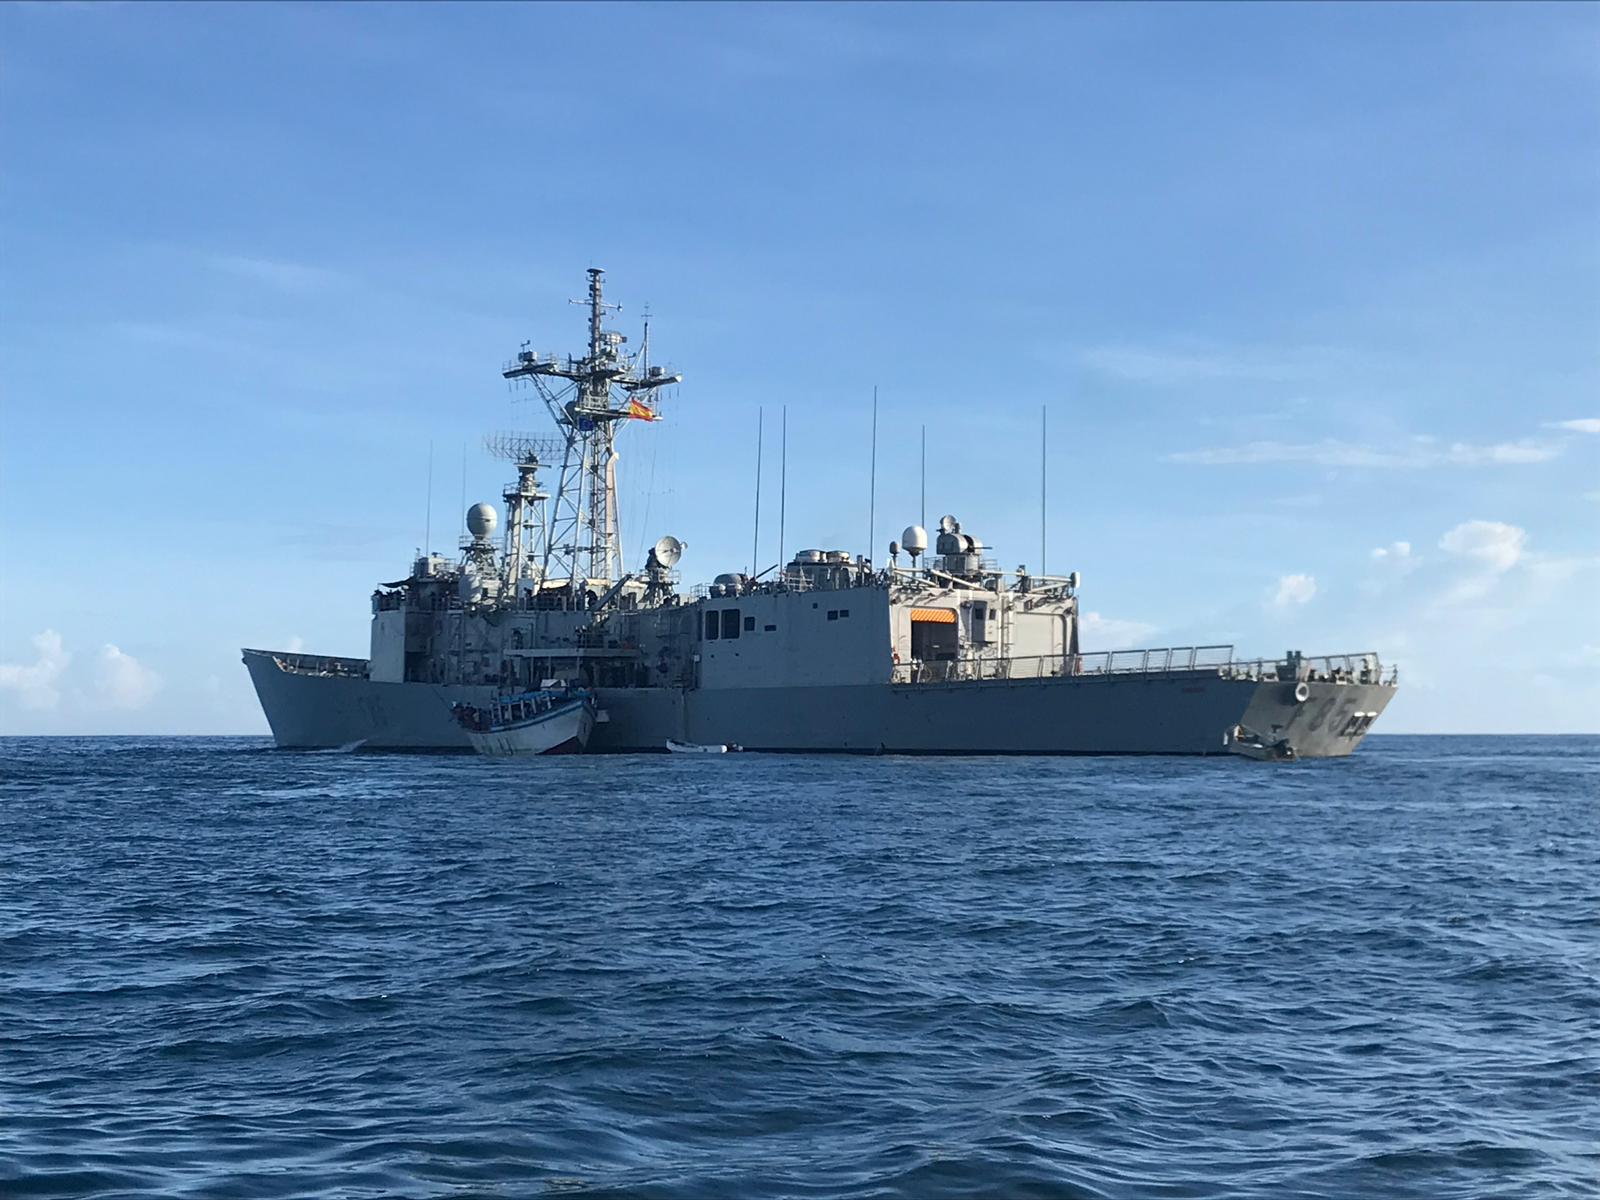 La fragata ‘Navarra’ entrega a las autoridades de Seychelles a cinco presuntos piratas para ser juzgados